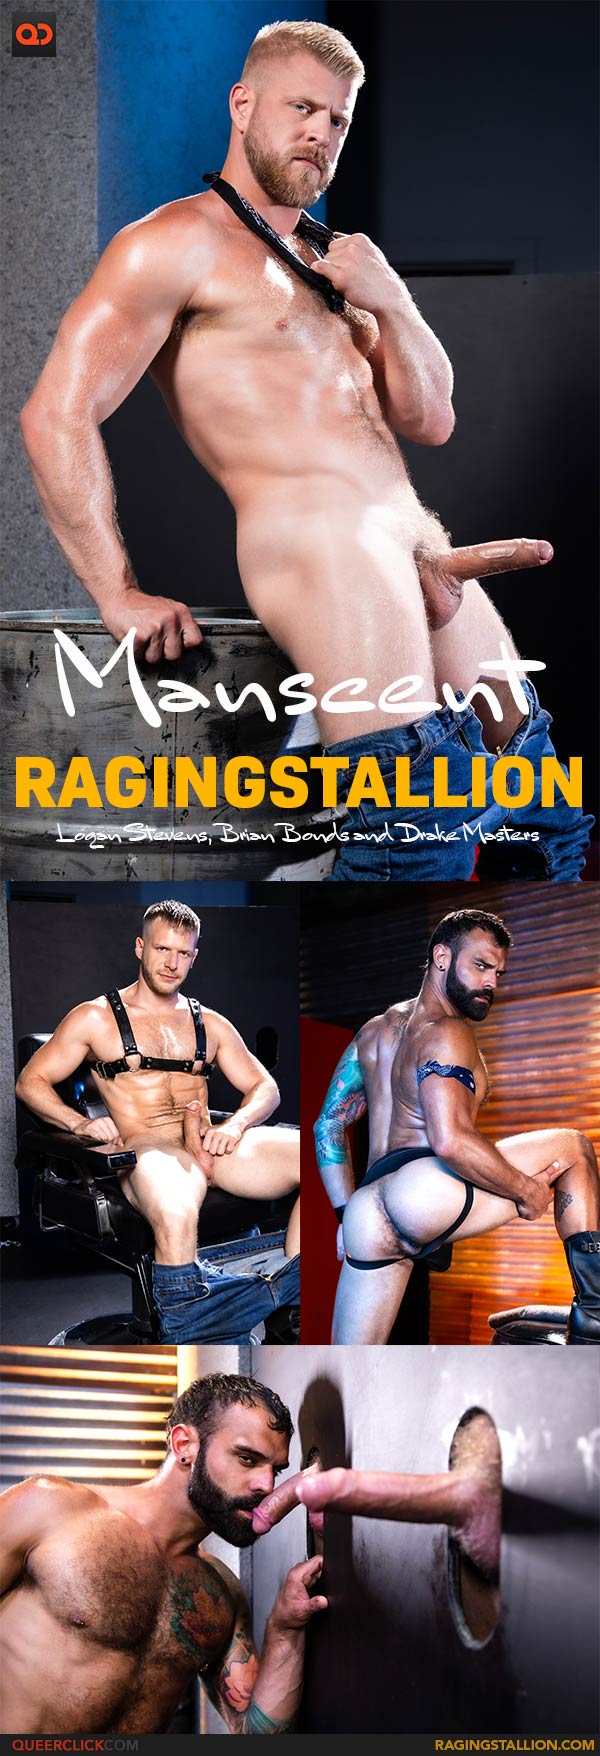 Raging Stallion: Logan Stevens, Brian Bonds and Drake Masters